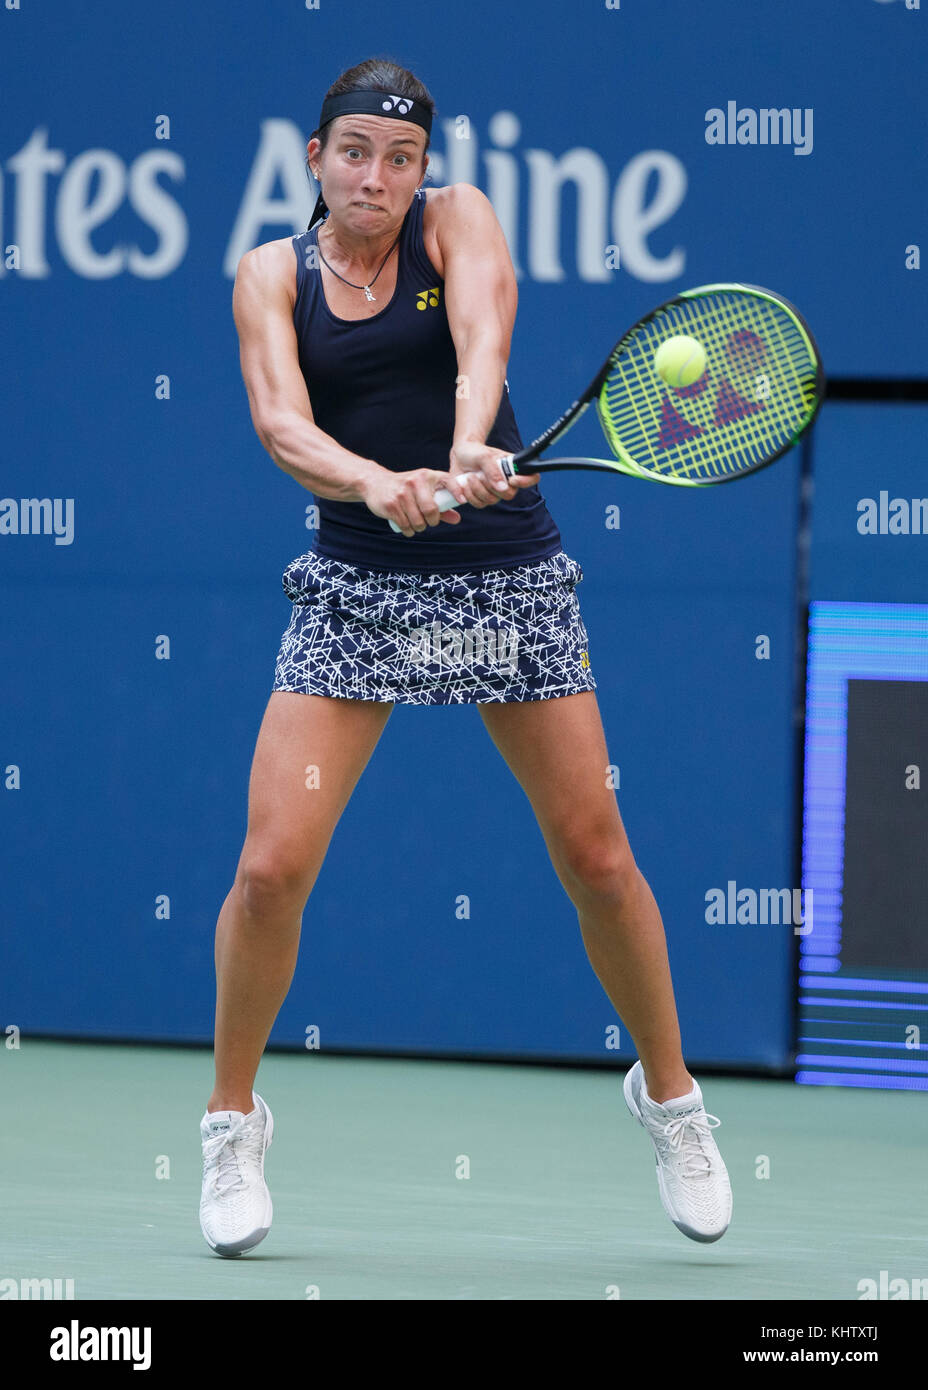 Latvian tennis player ANASTASIJA SEVASTOVA (LAT) hitting a backhand shot  during women's singles match at US Open 2017 Tennis Championship, New York  Ci Stock Photo - Alamy